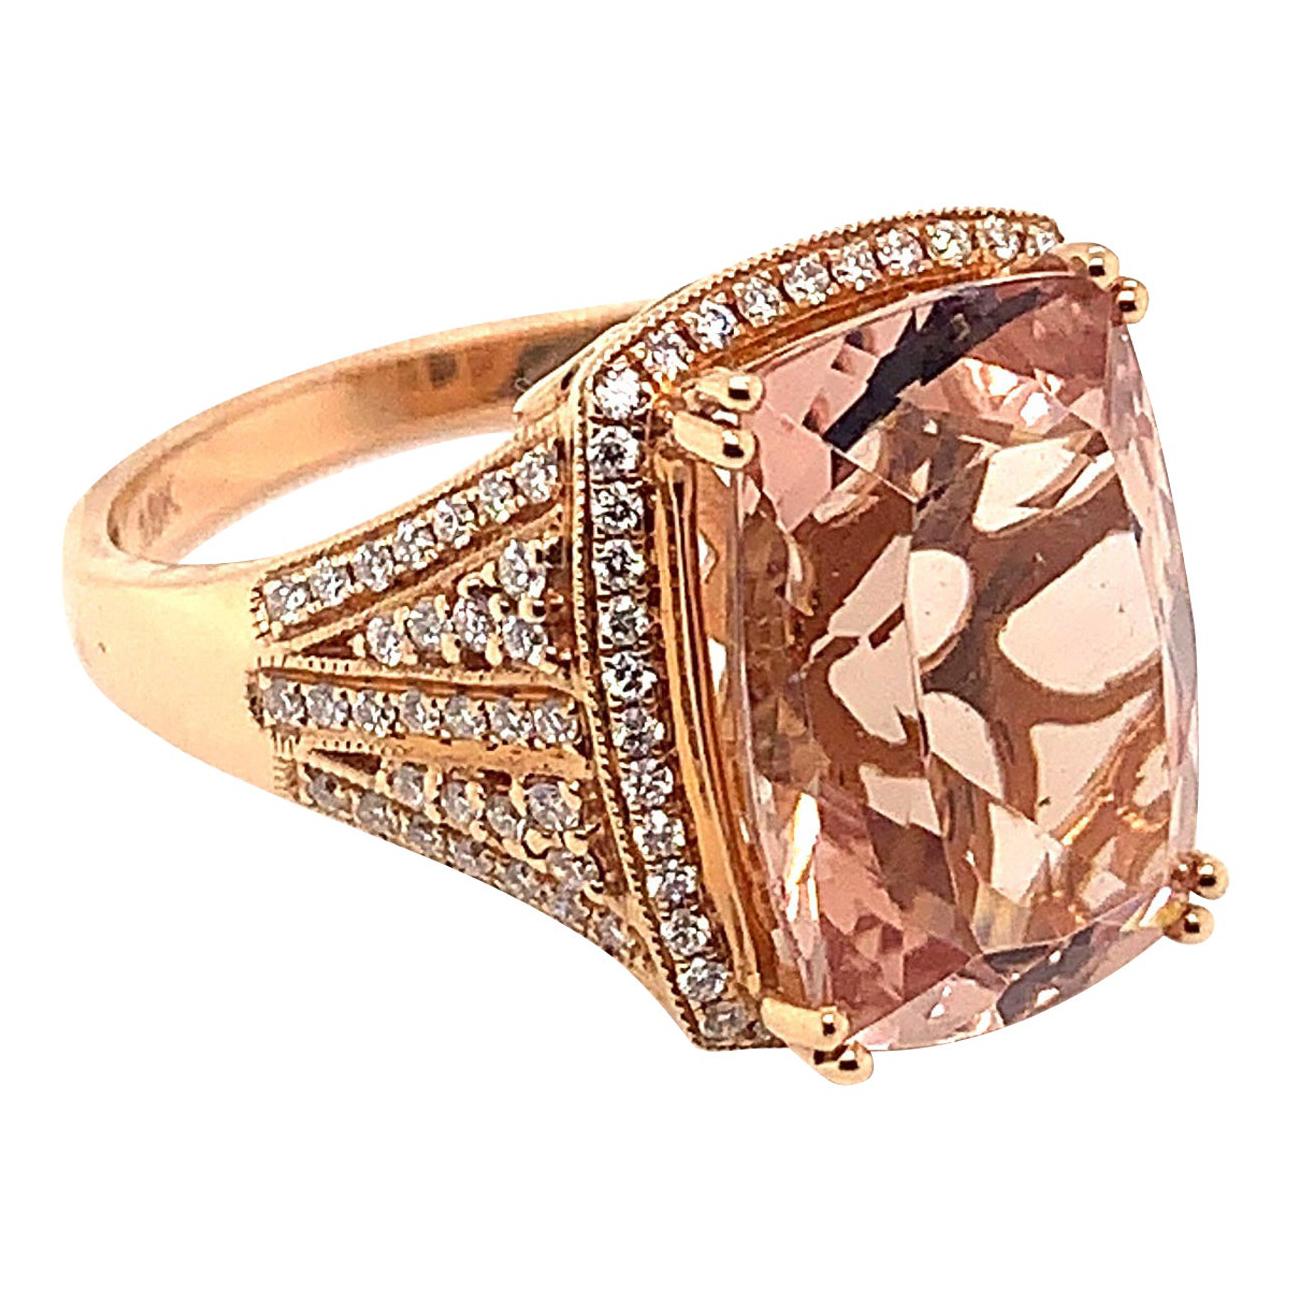 6,49 Karat kissenförmiger Morganit-Ring aus 18 Karat Roségold mit Diamanten